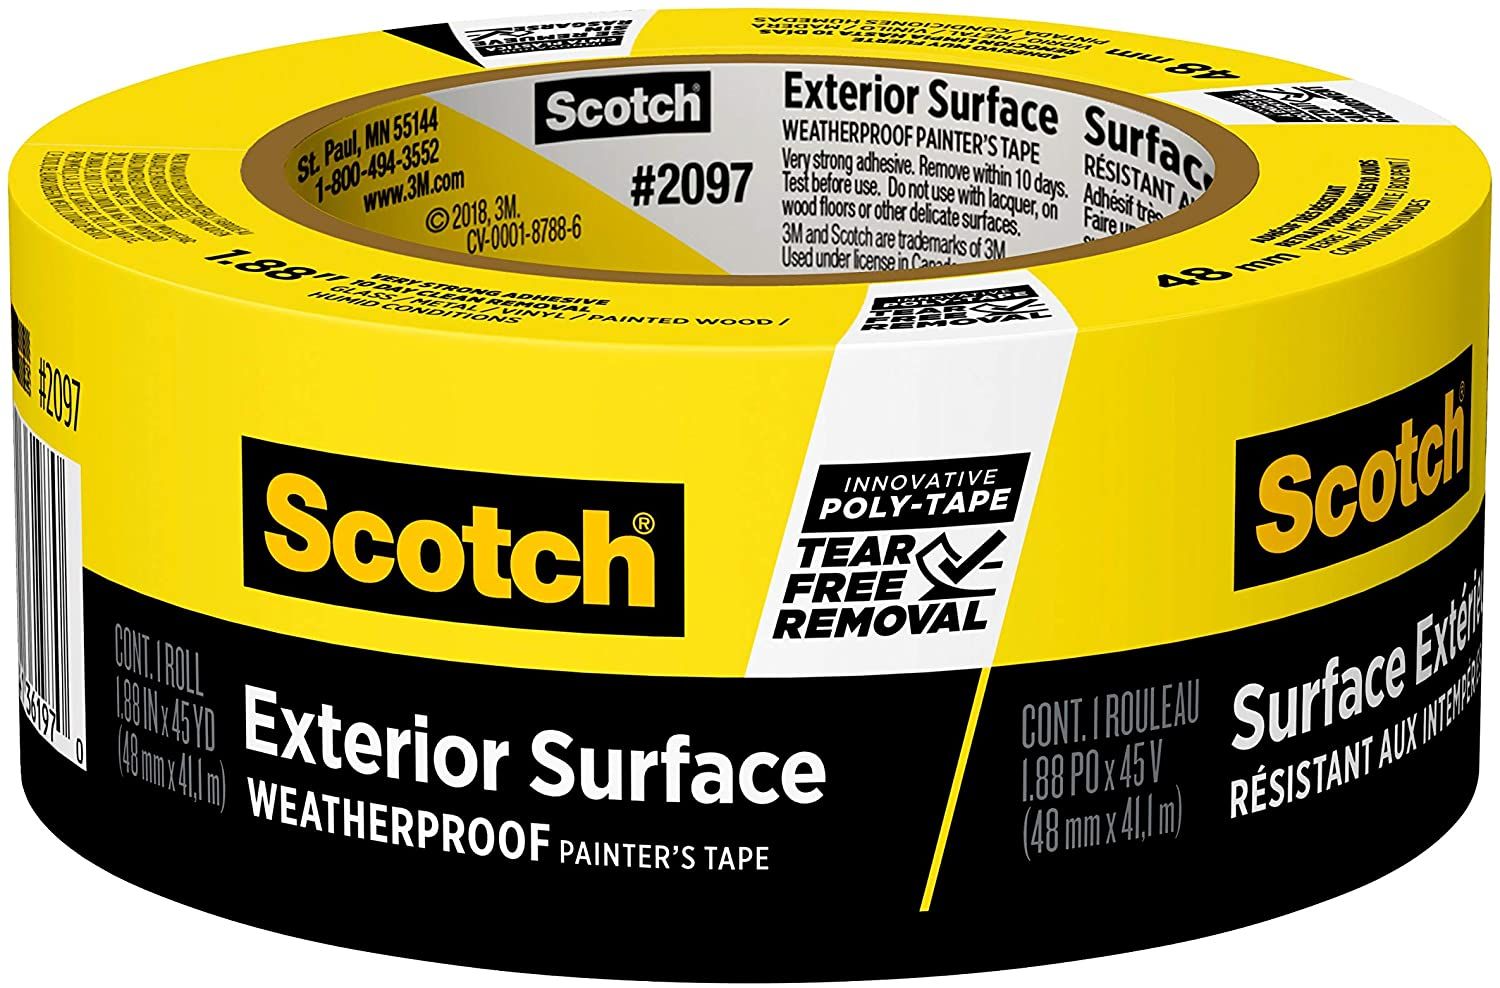 Scotch Exterior Surface Weatherproof Painter’s Tape